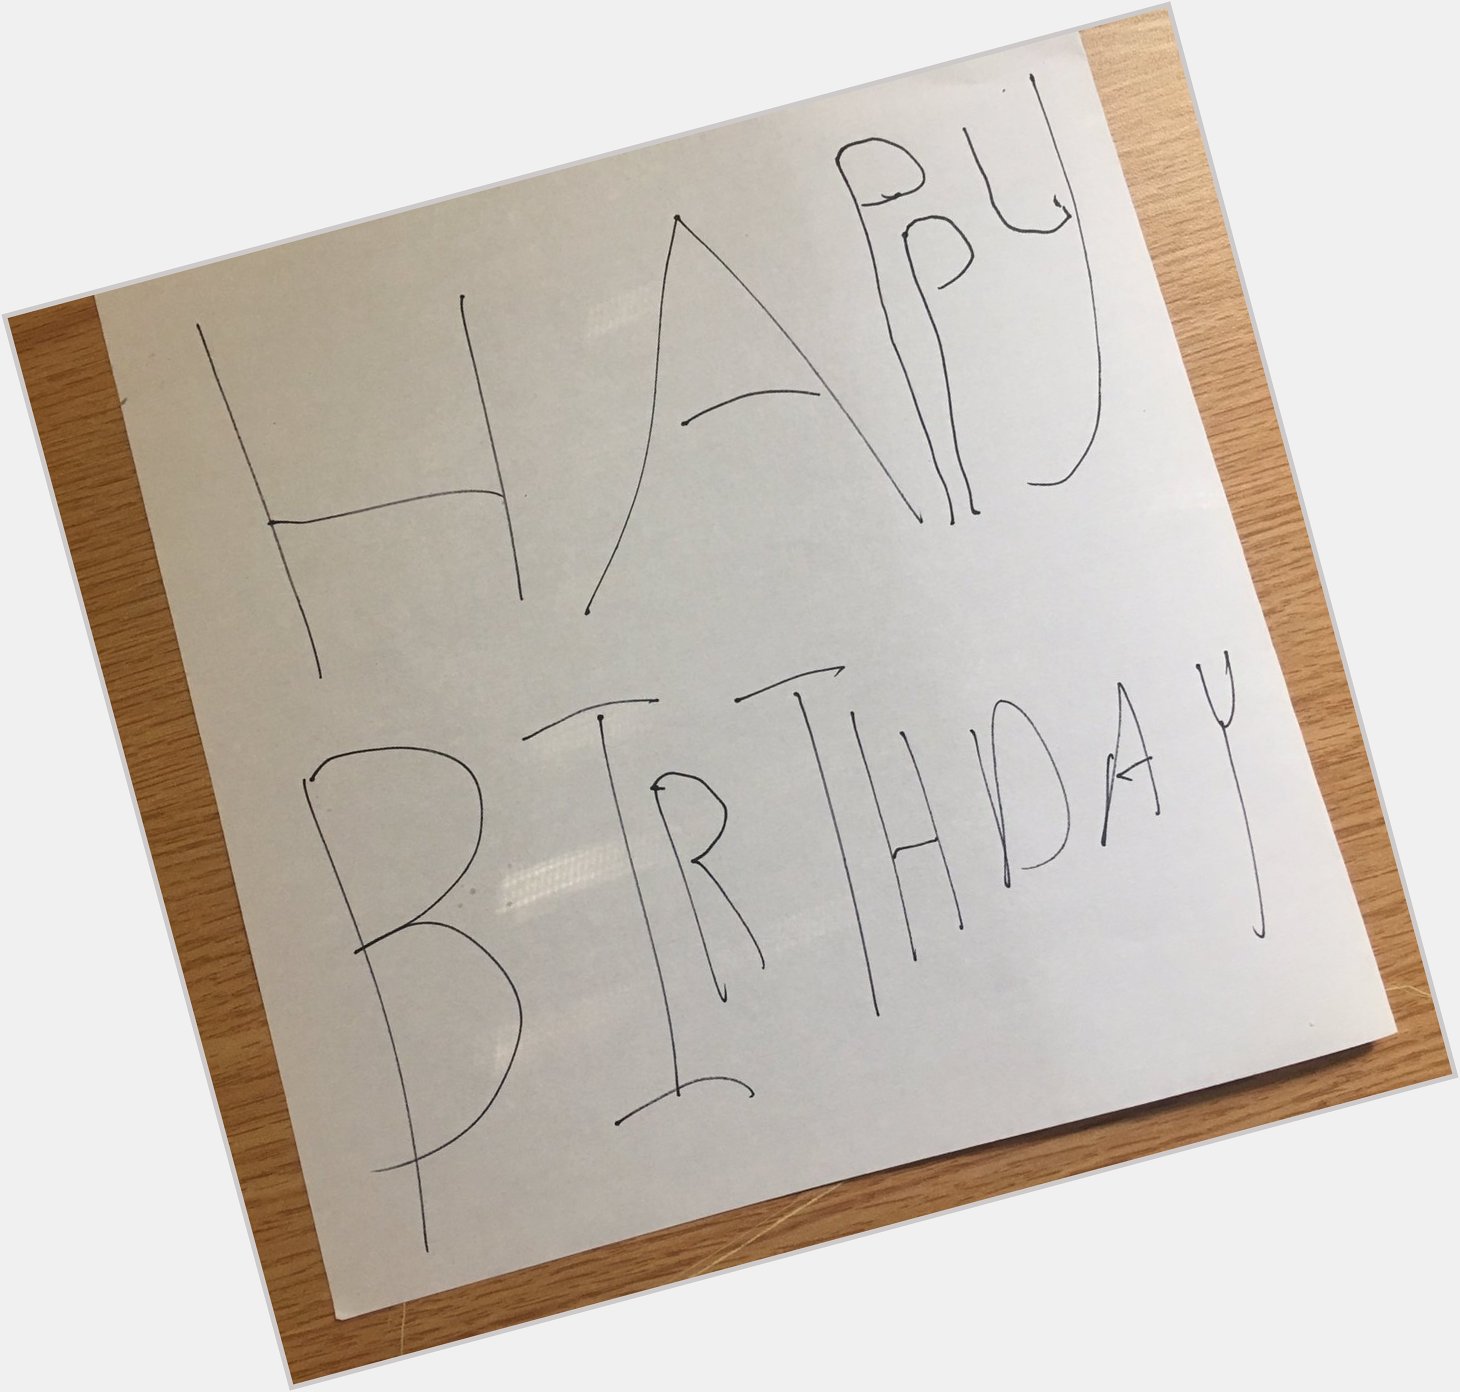 Since it s John Mulaney s birthday I made a happy birthday sign! 